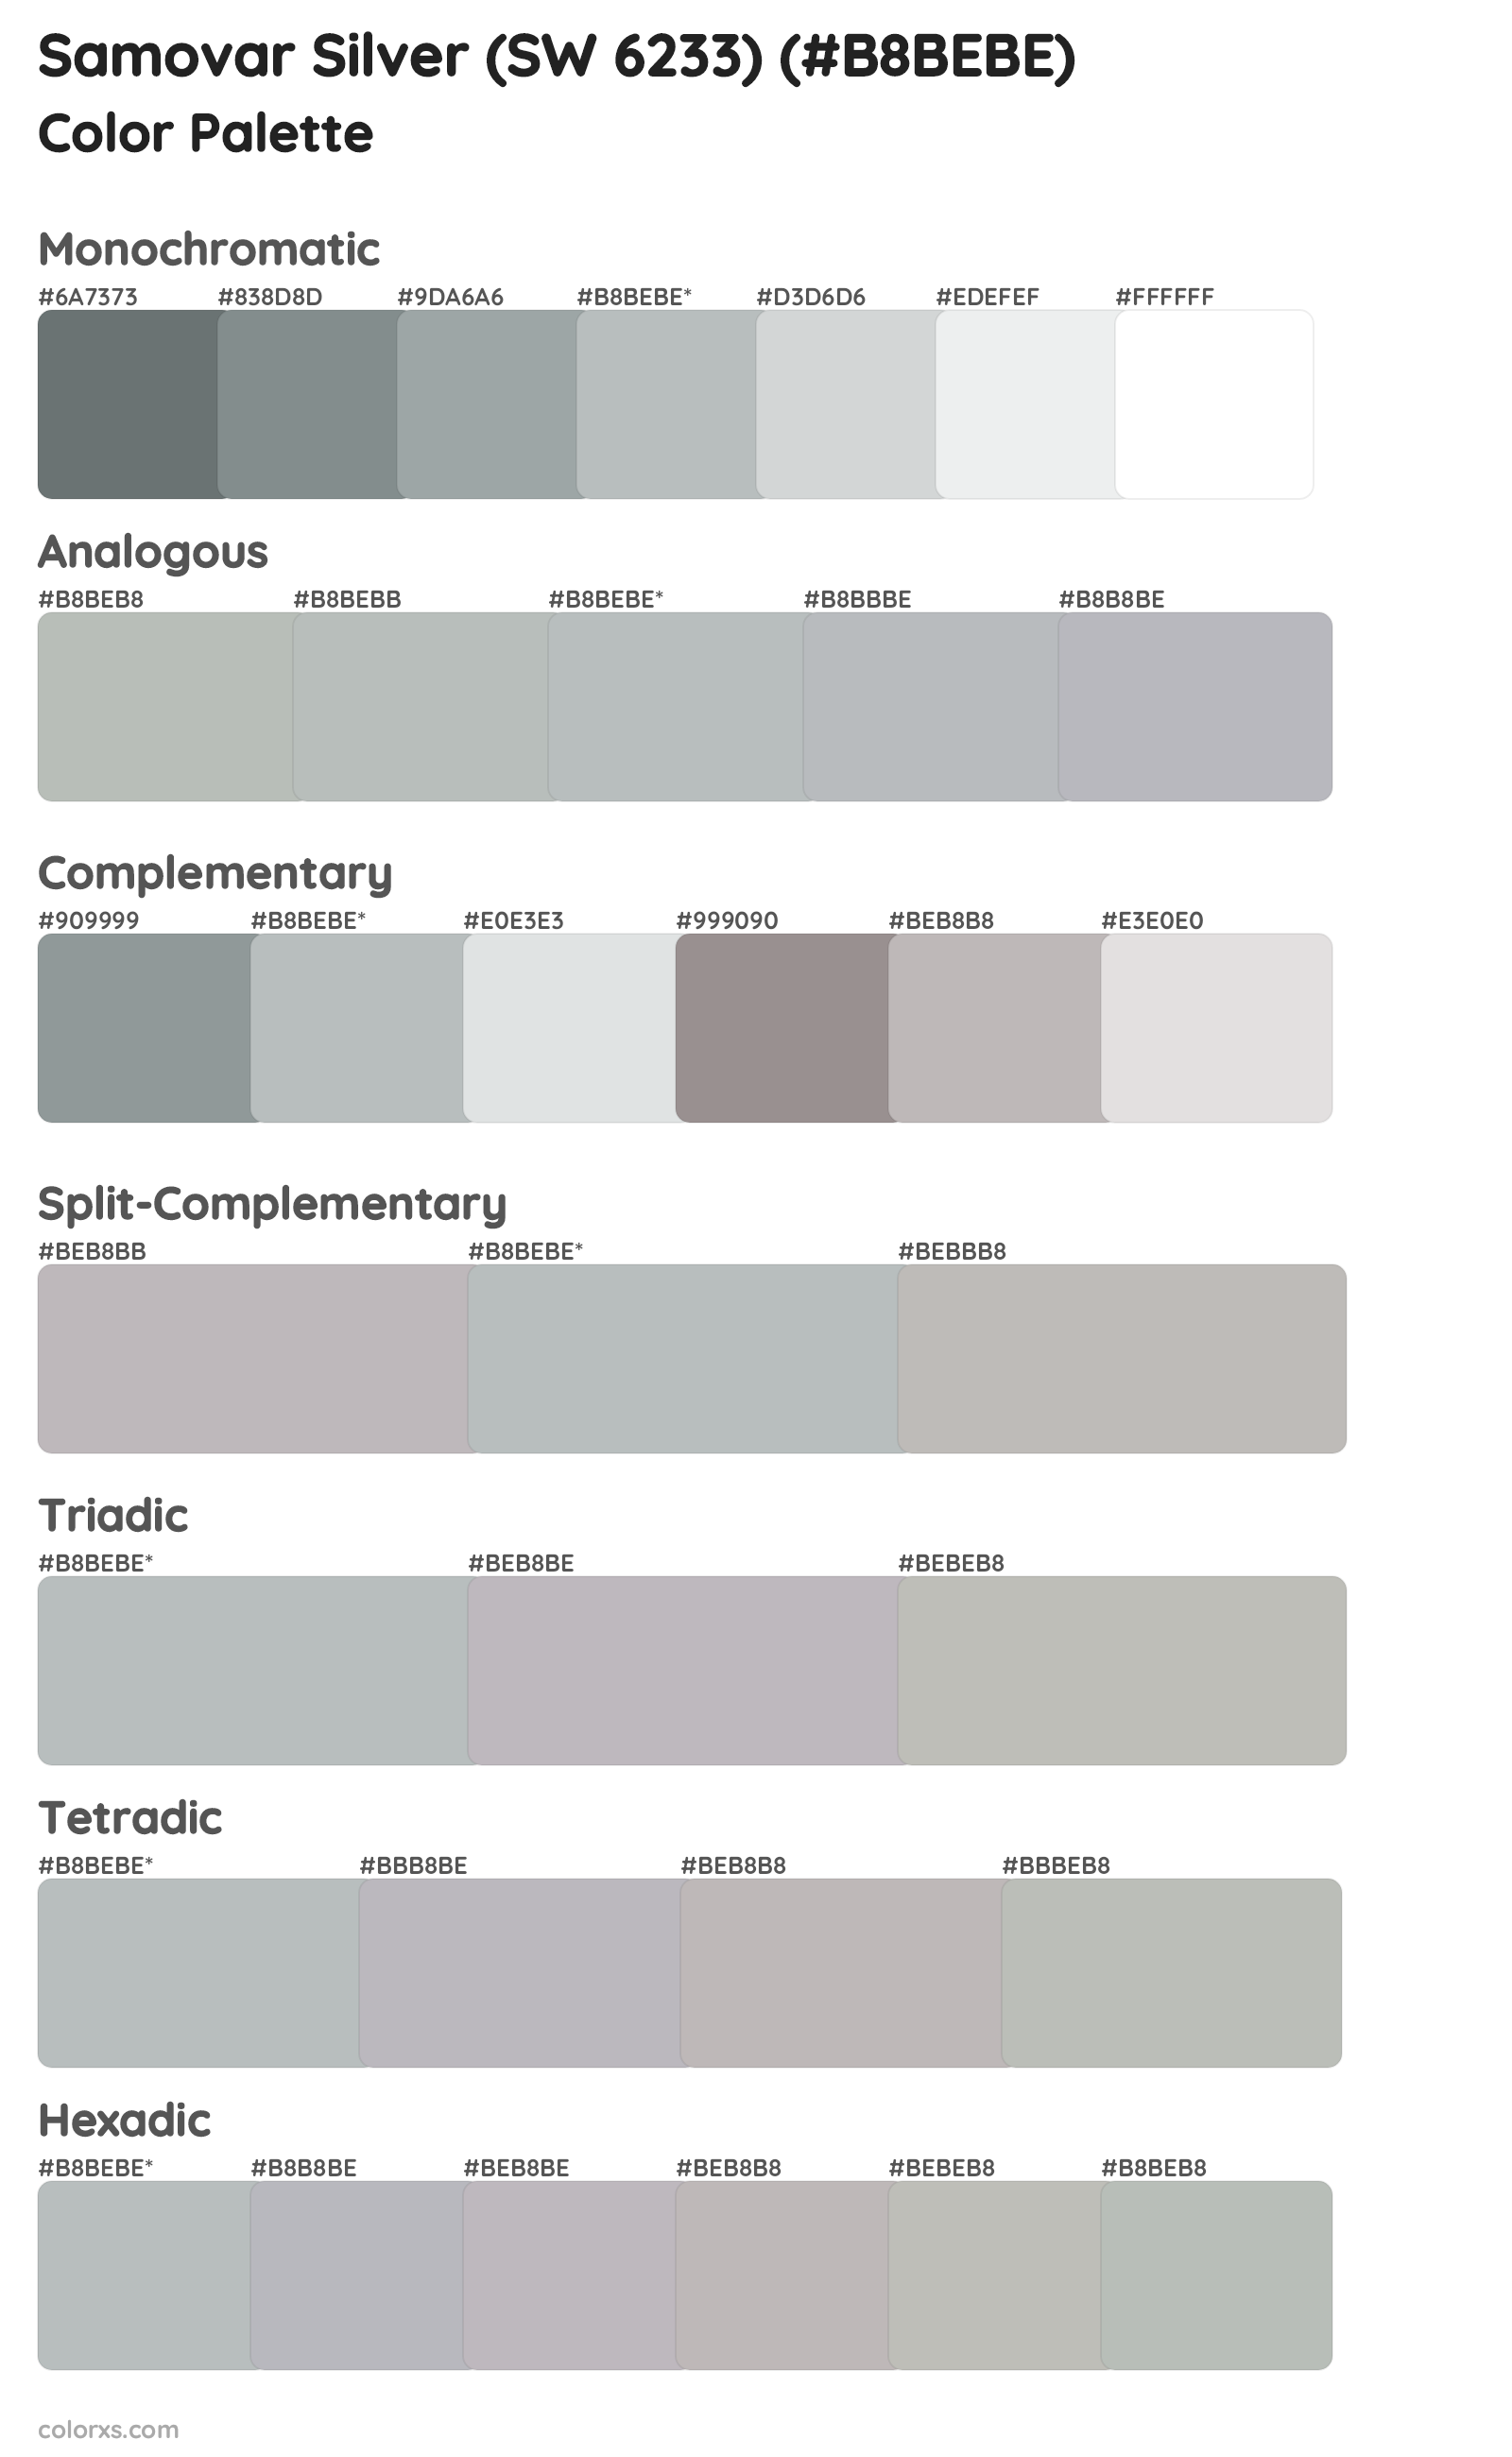 Samovar Silver (SW 6233) Color Scheme Palettes